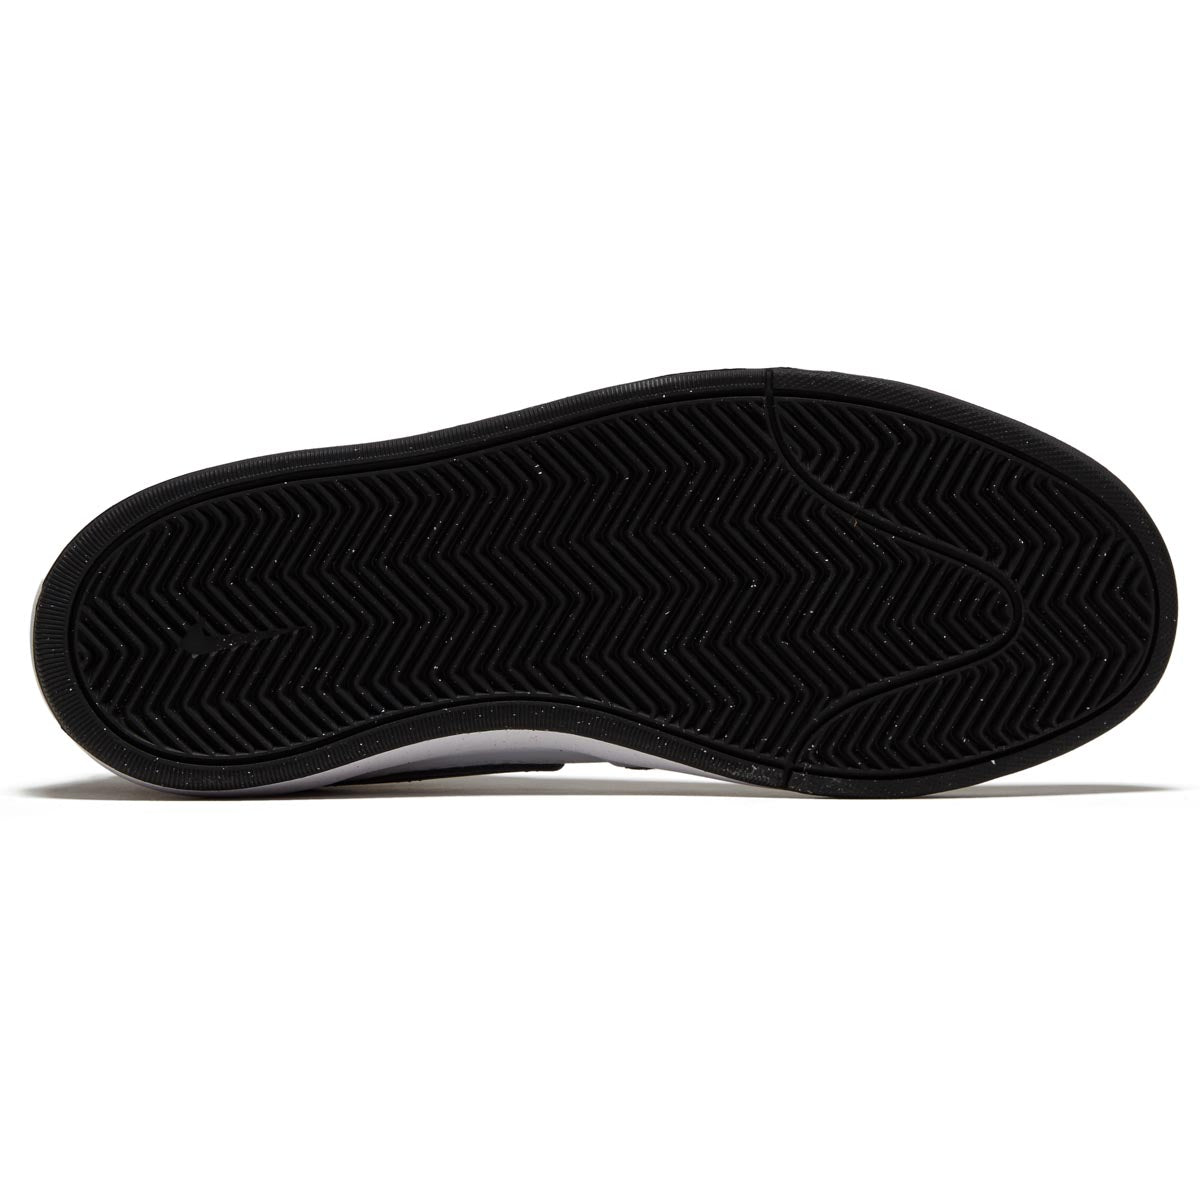 Nike SB React Leo Shoes - Light Chocolate/Black/White/Black image 4